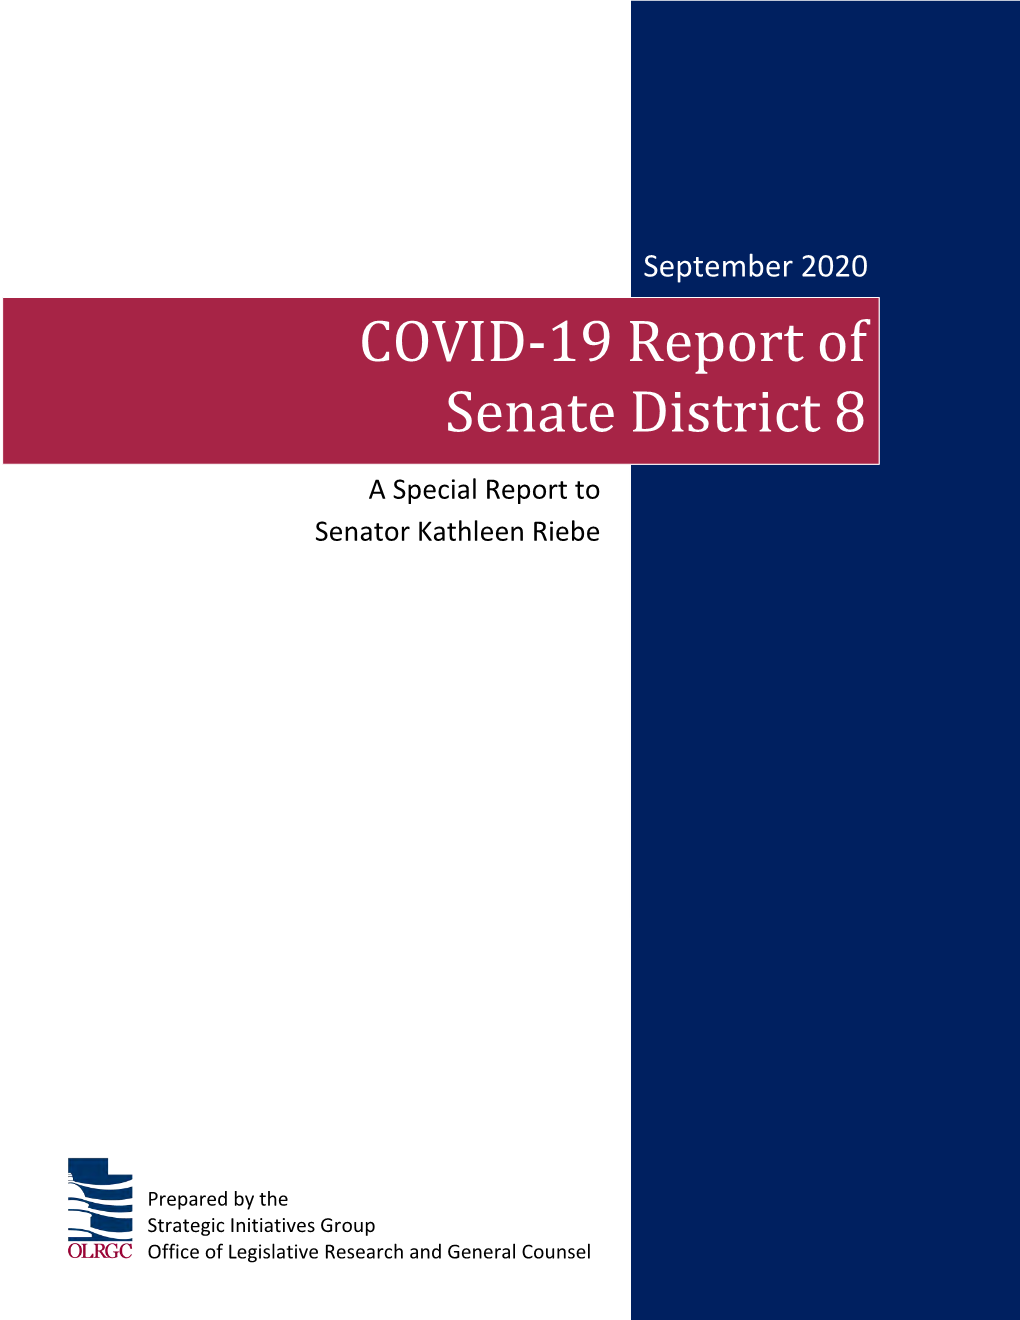 Sept 2020 COVID-19 Report of Senate District 8